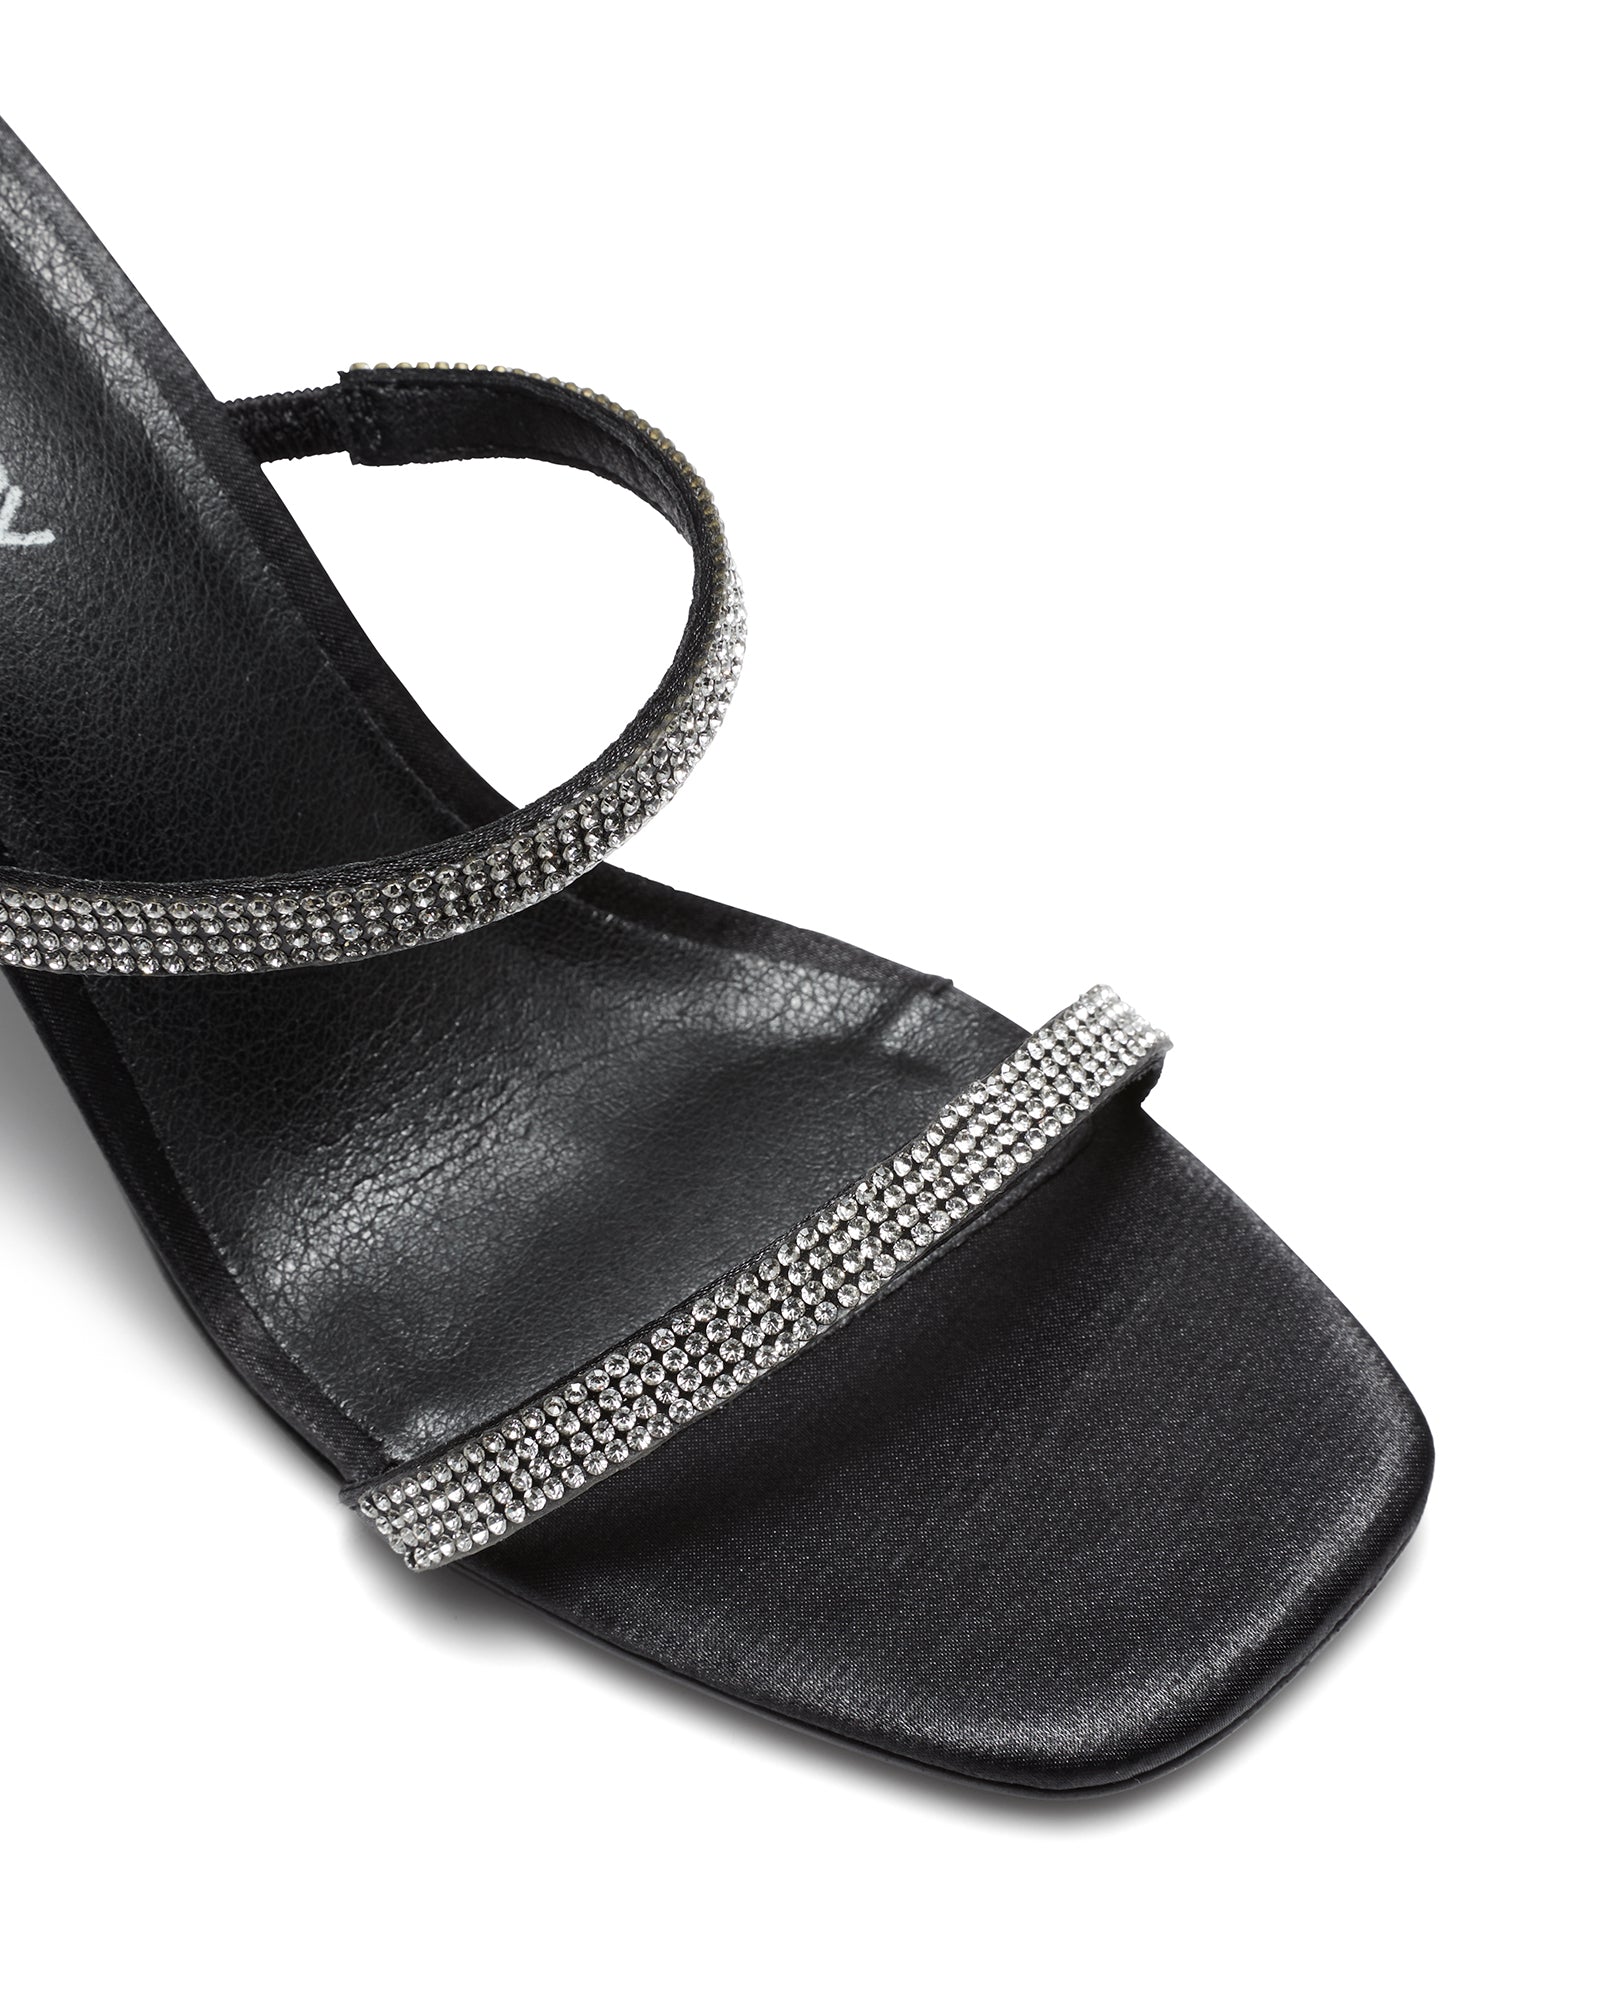 Therapy Shoes Betray Black Satin | Women's Heels | Mule | Diamante | Dress